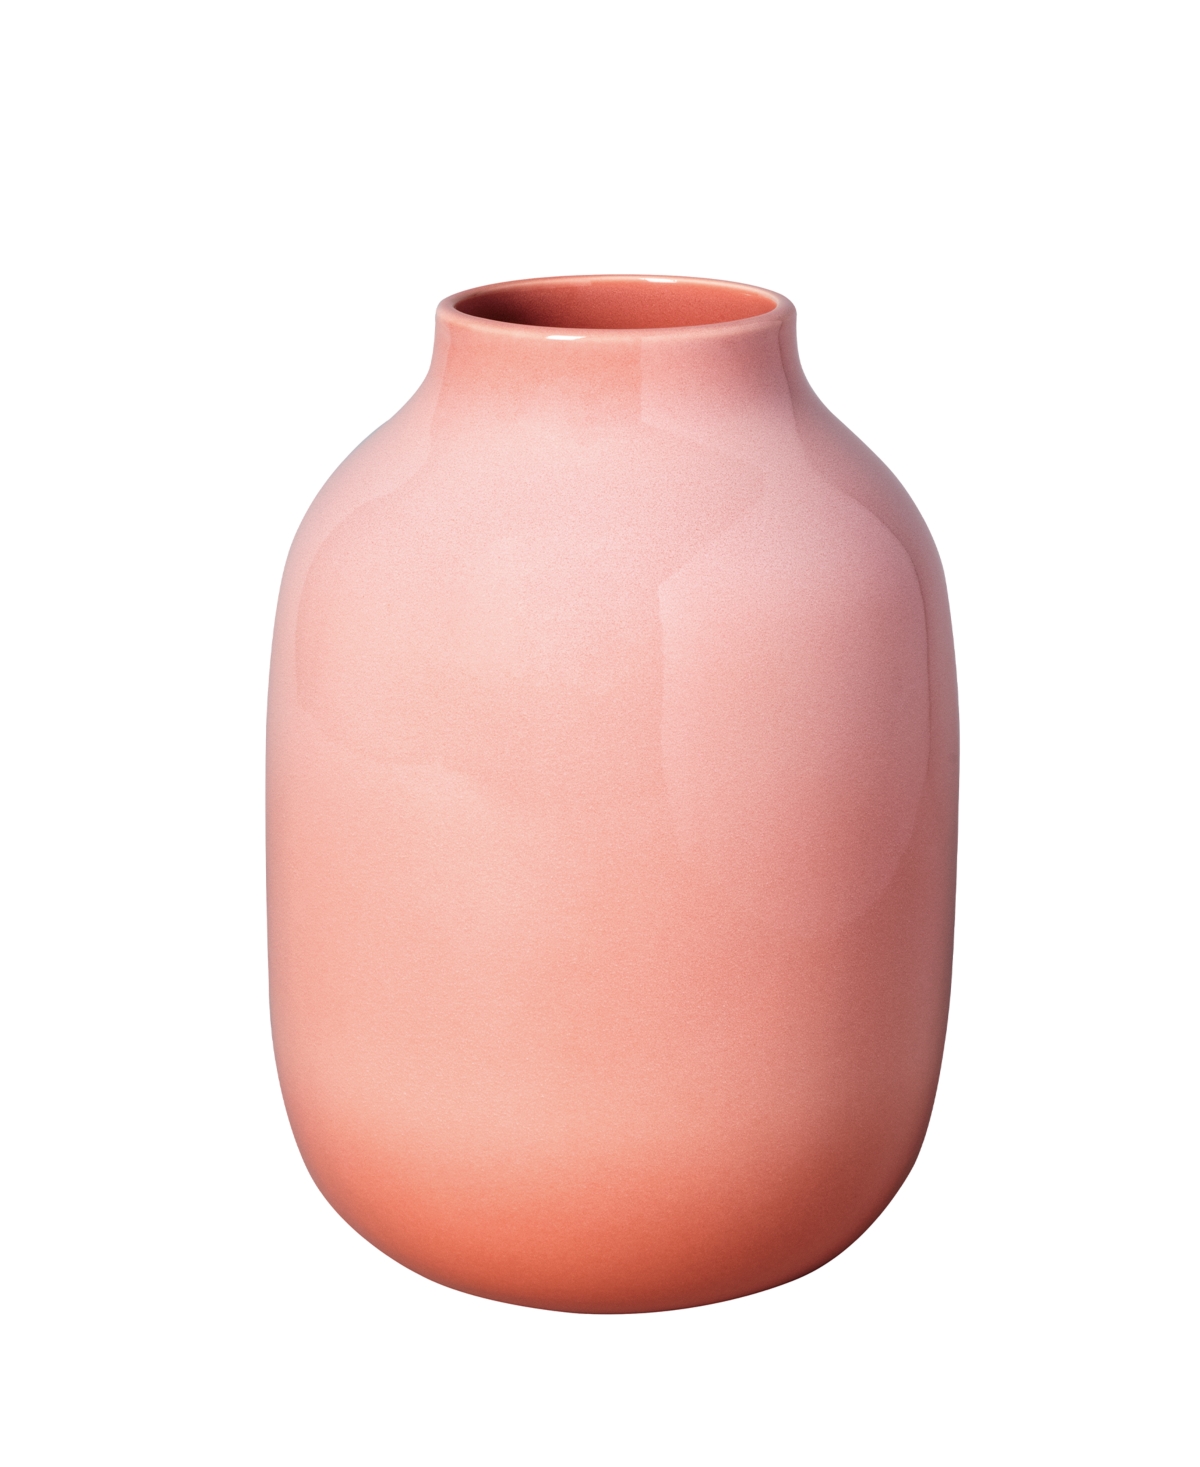 Villeroy & Boch Perlemor Home Nek Vase, Large In Coral